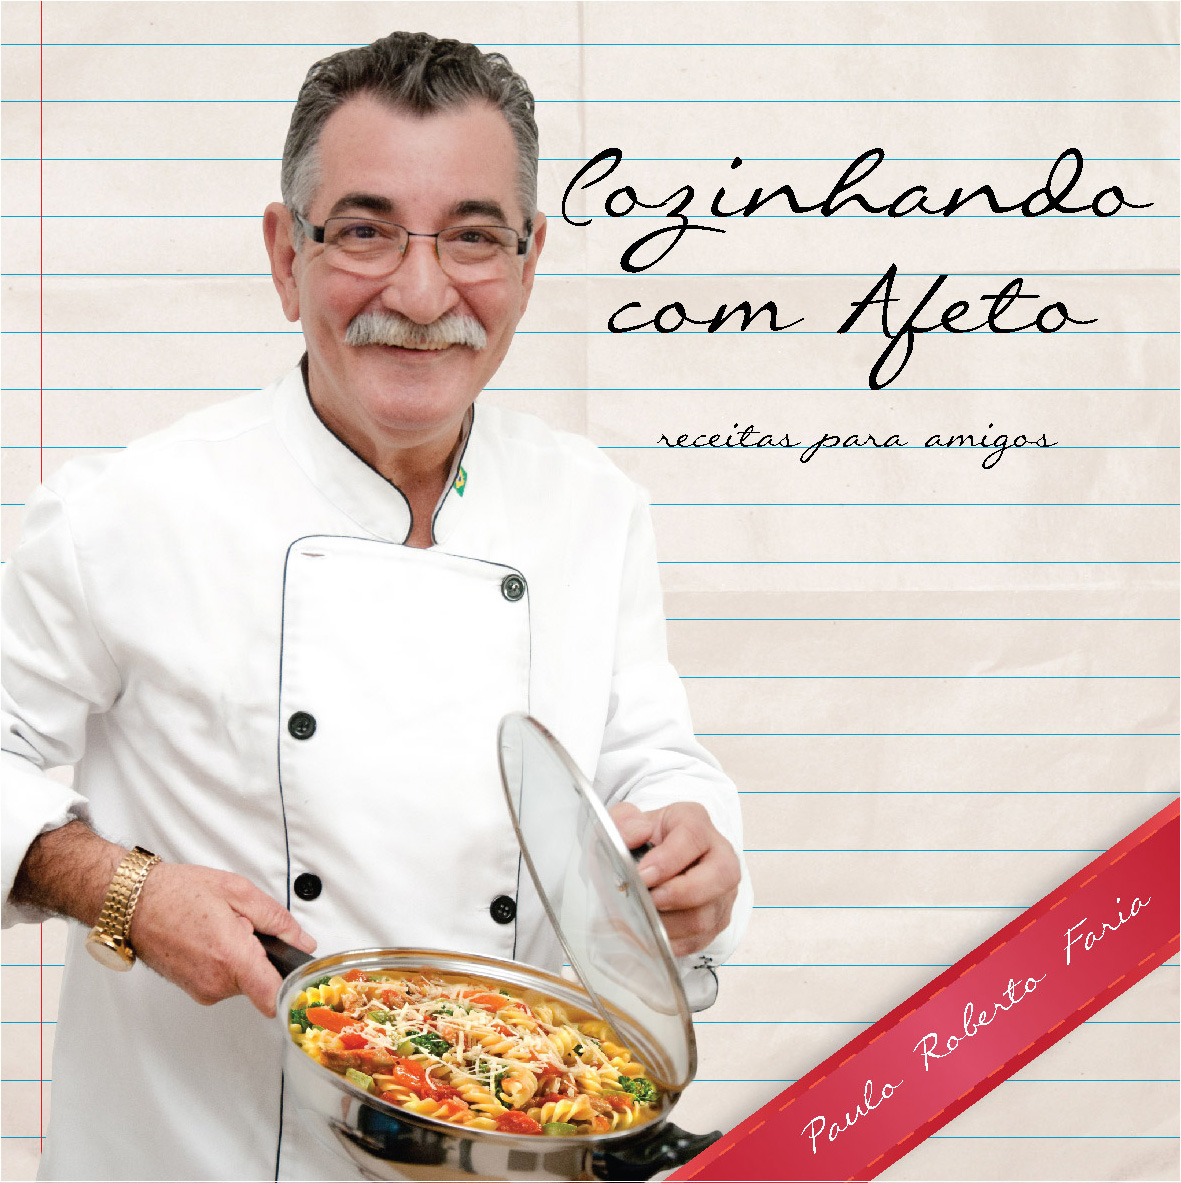 paulo faria cozinhando afeto receitas Amigos Livro cozinha comida Louis Pellissier Capa cover book kitchen Food  receipt friend